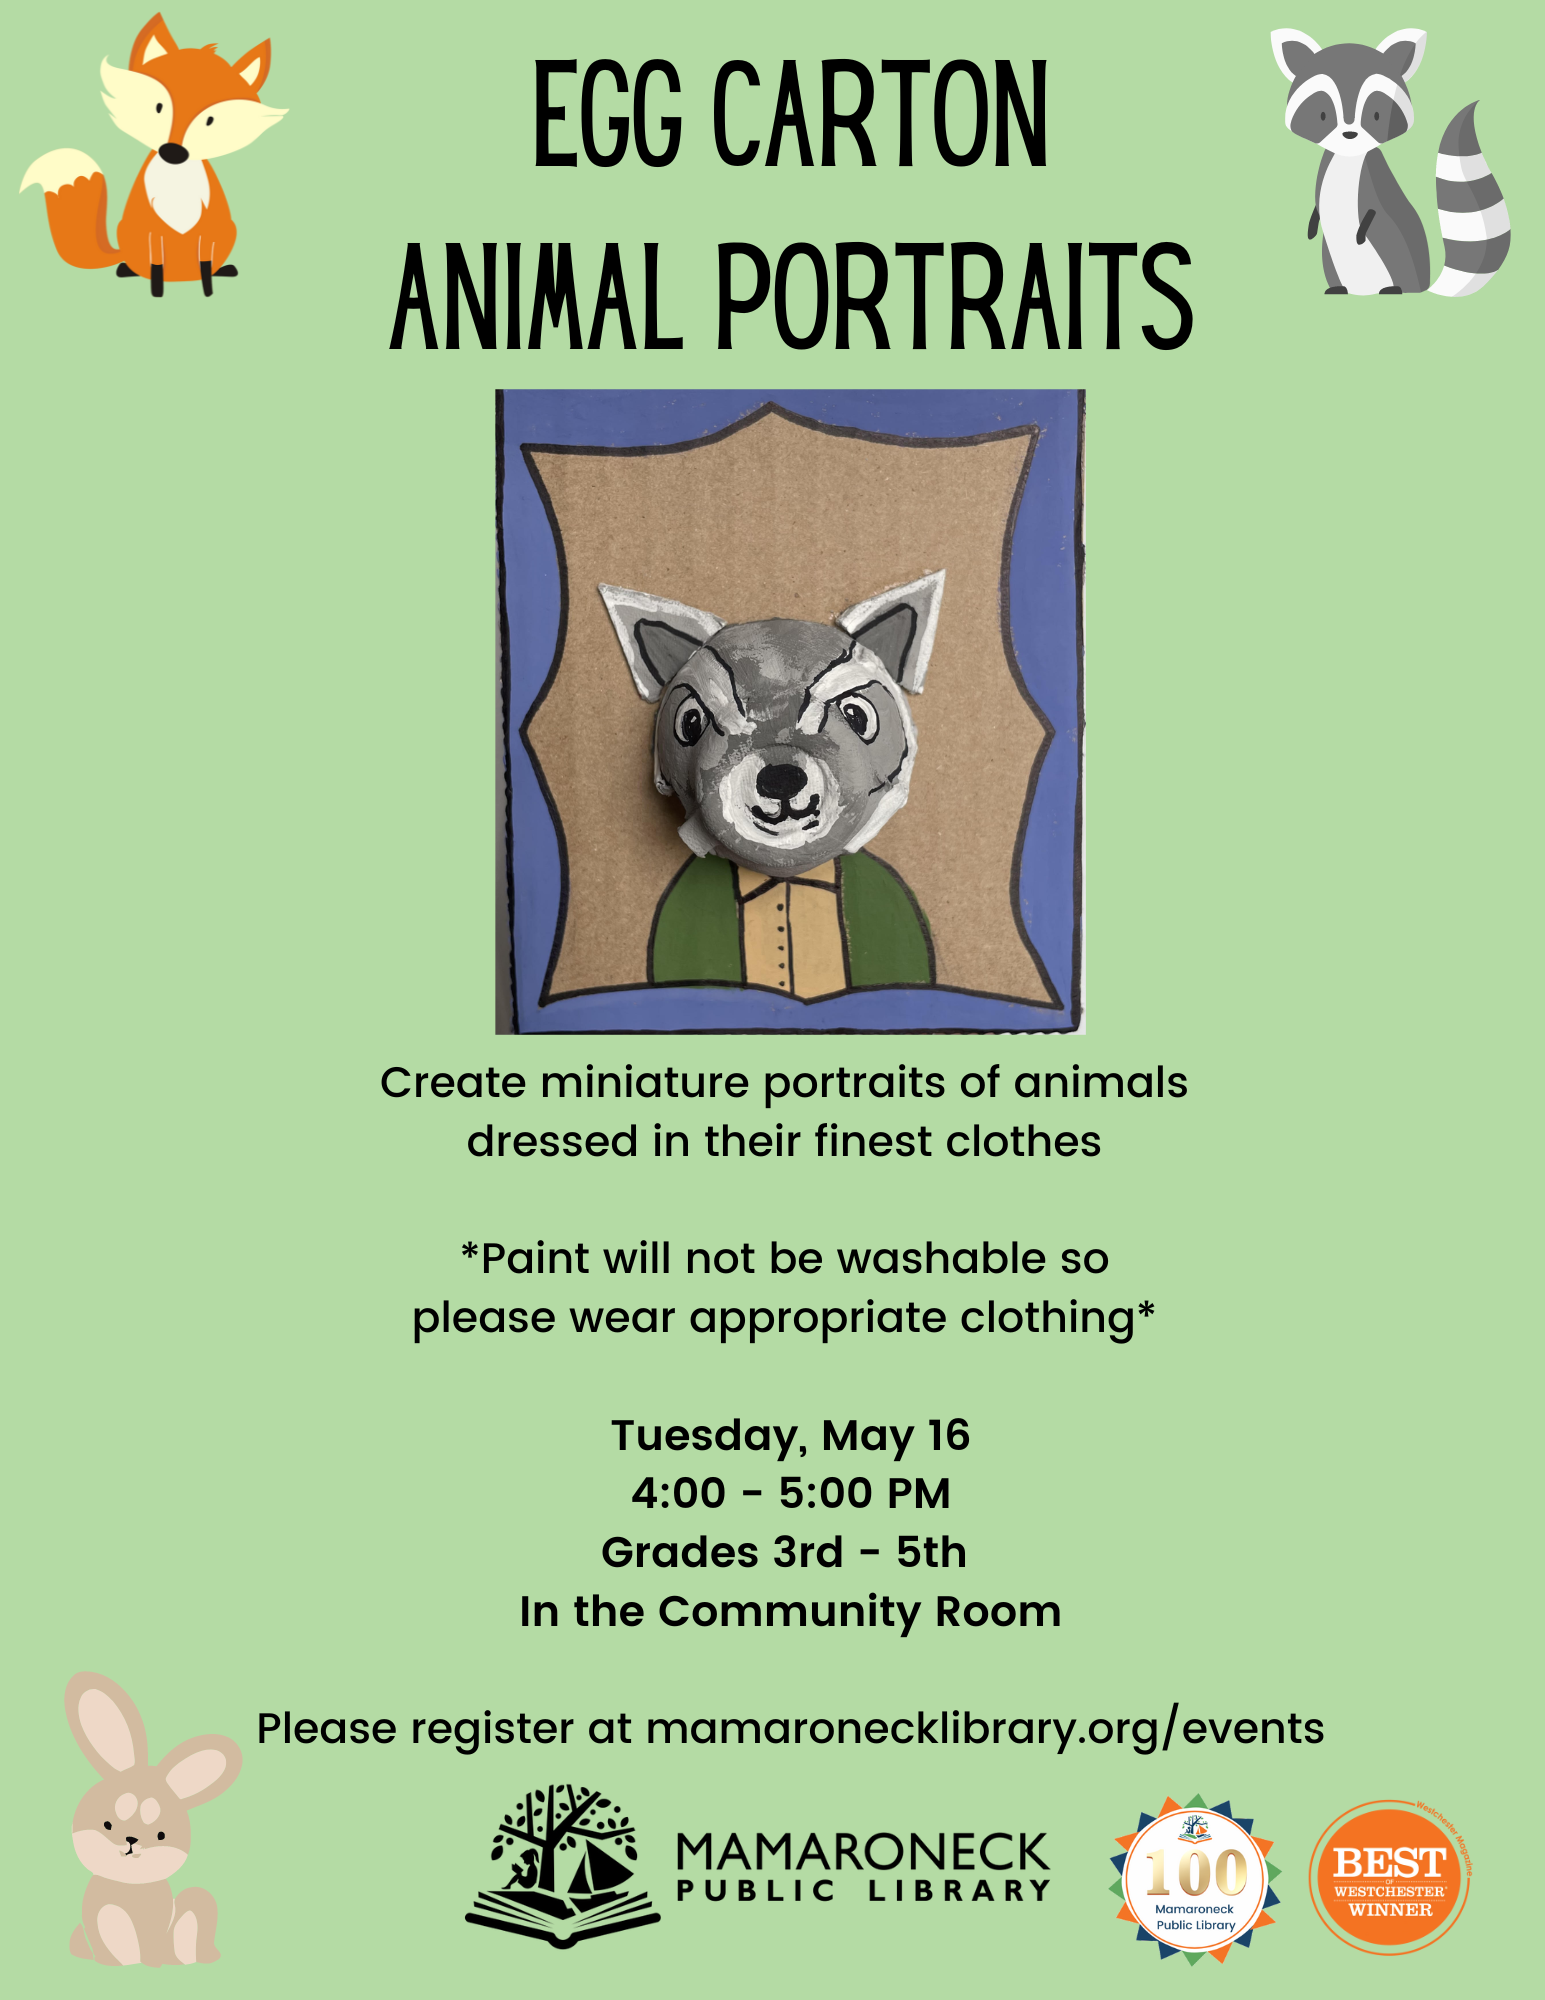 Egg Carton Animal Portraits 5/16 @ 4-5 - - Community Room